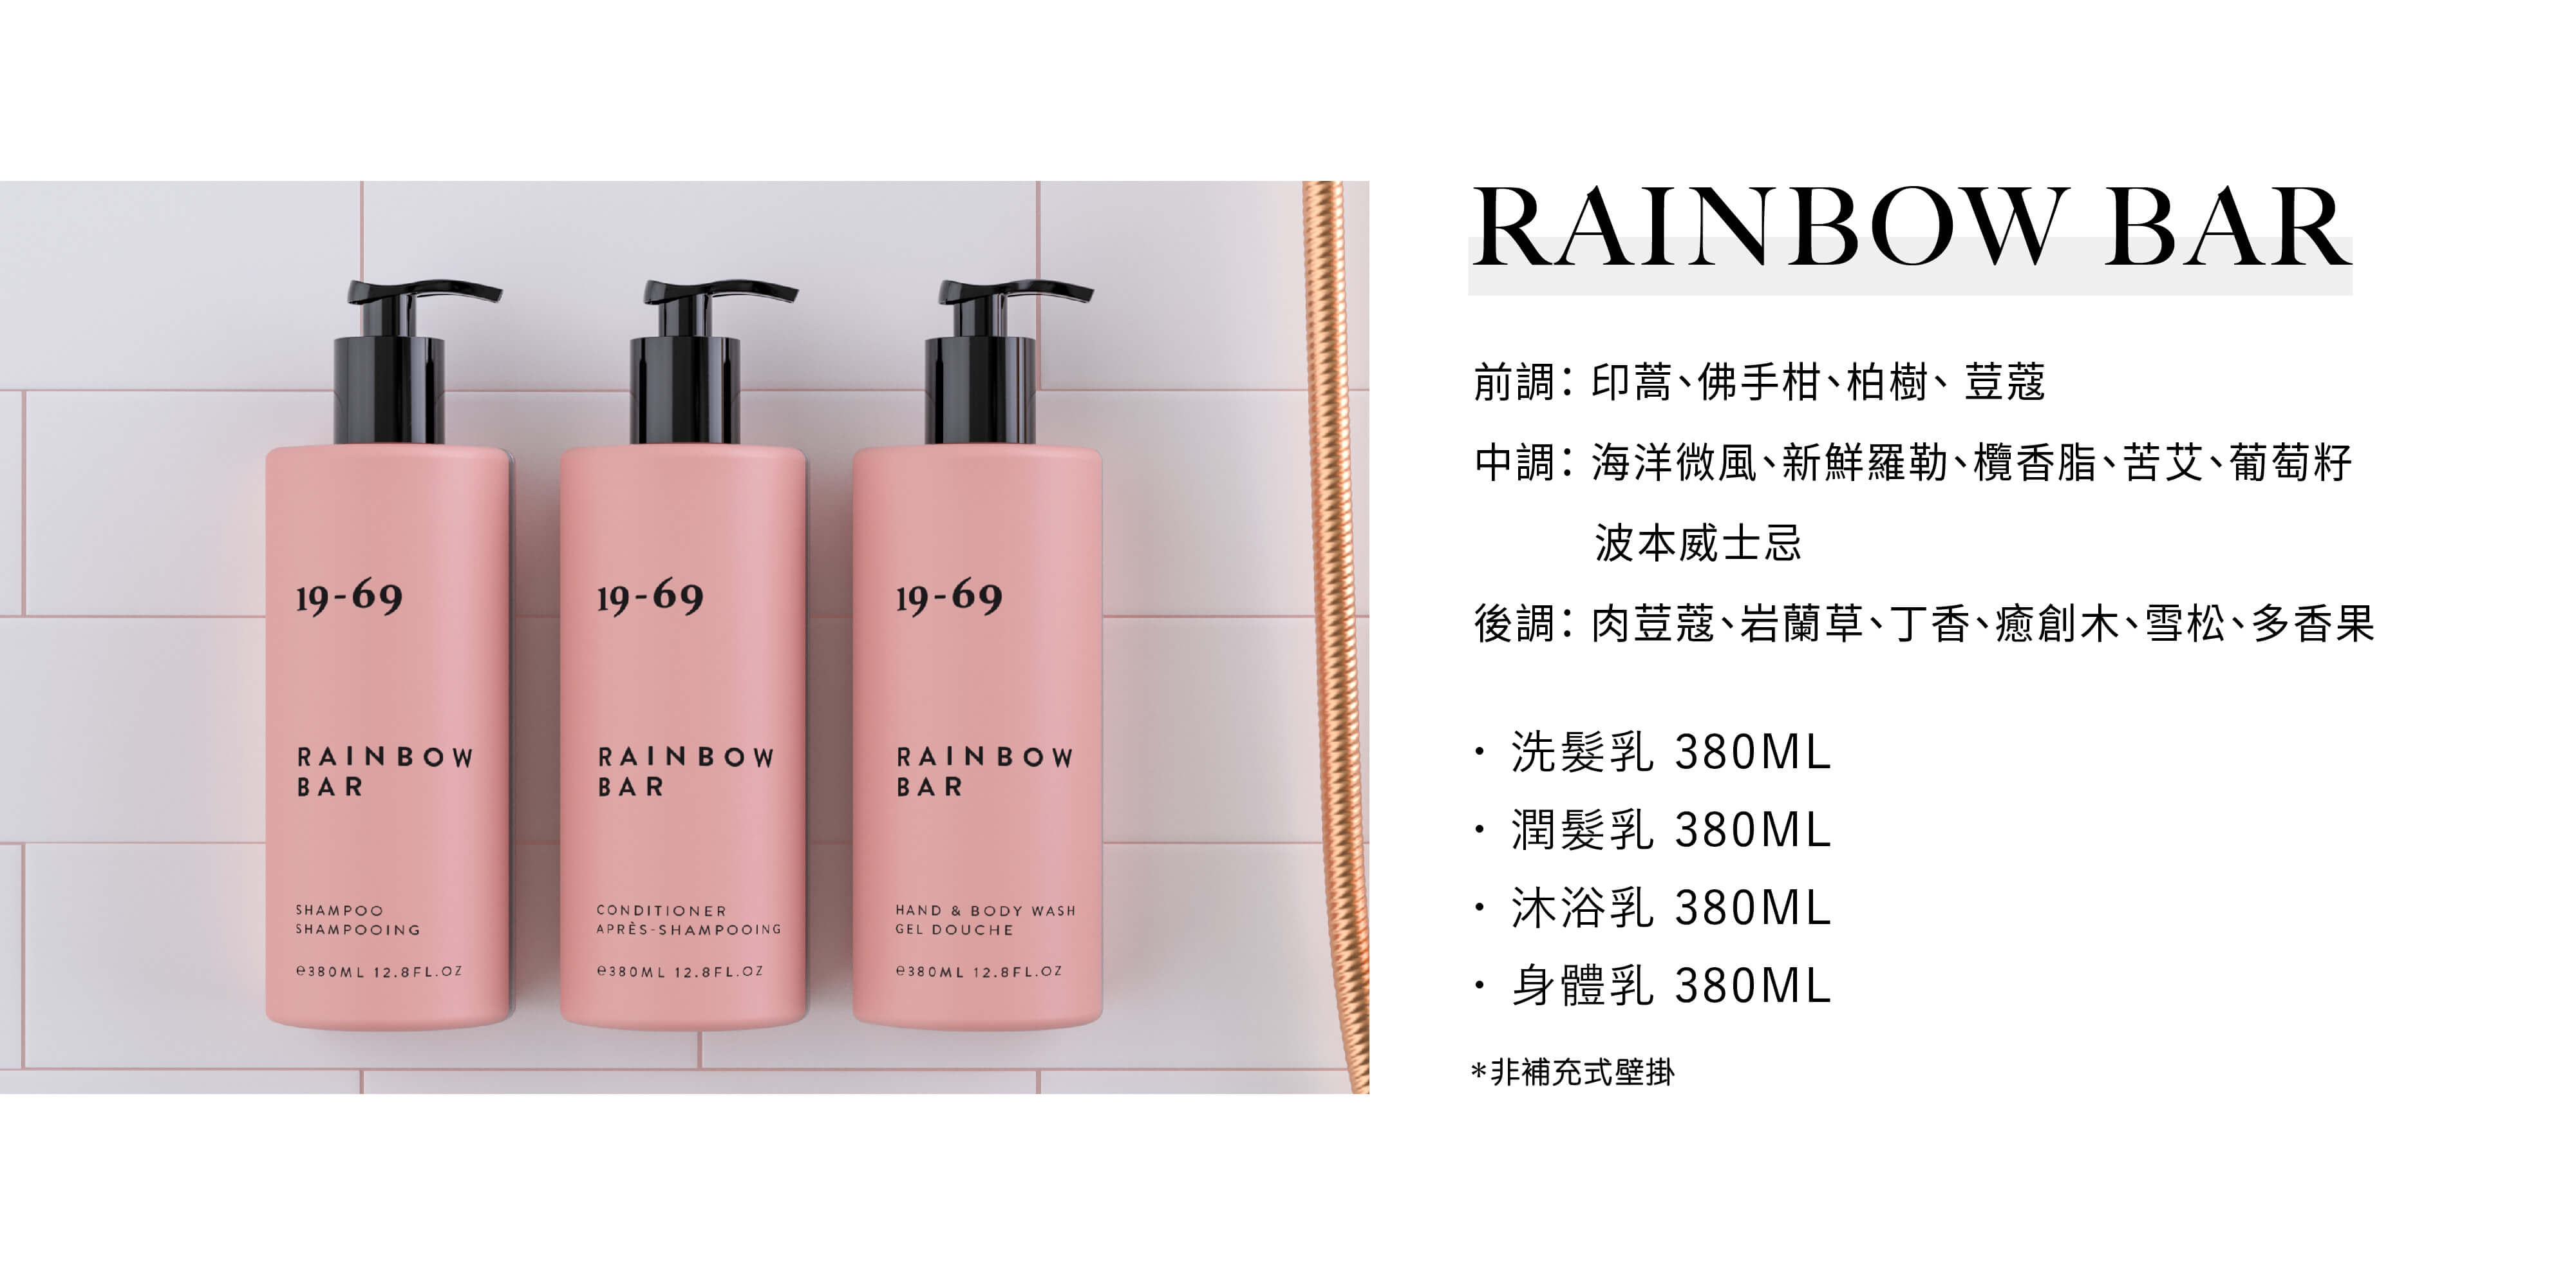 19-69 hotel collection飯店沐浴用品 rainbow bar系列，為Sunlife晨居飯店沐浴備品廠商提供